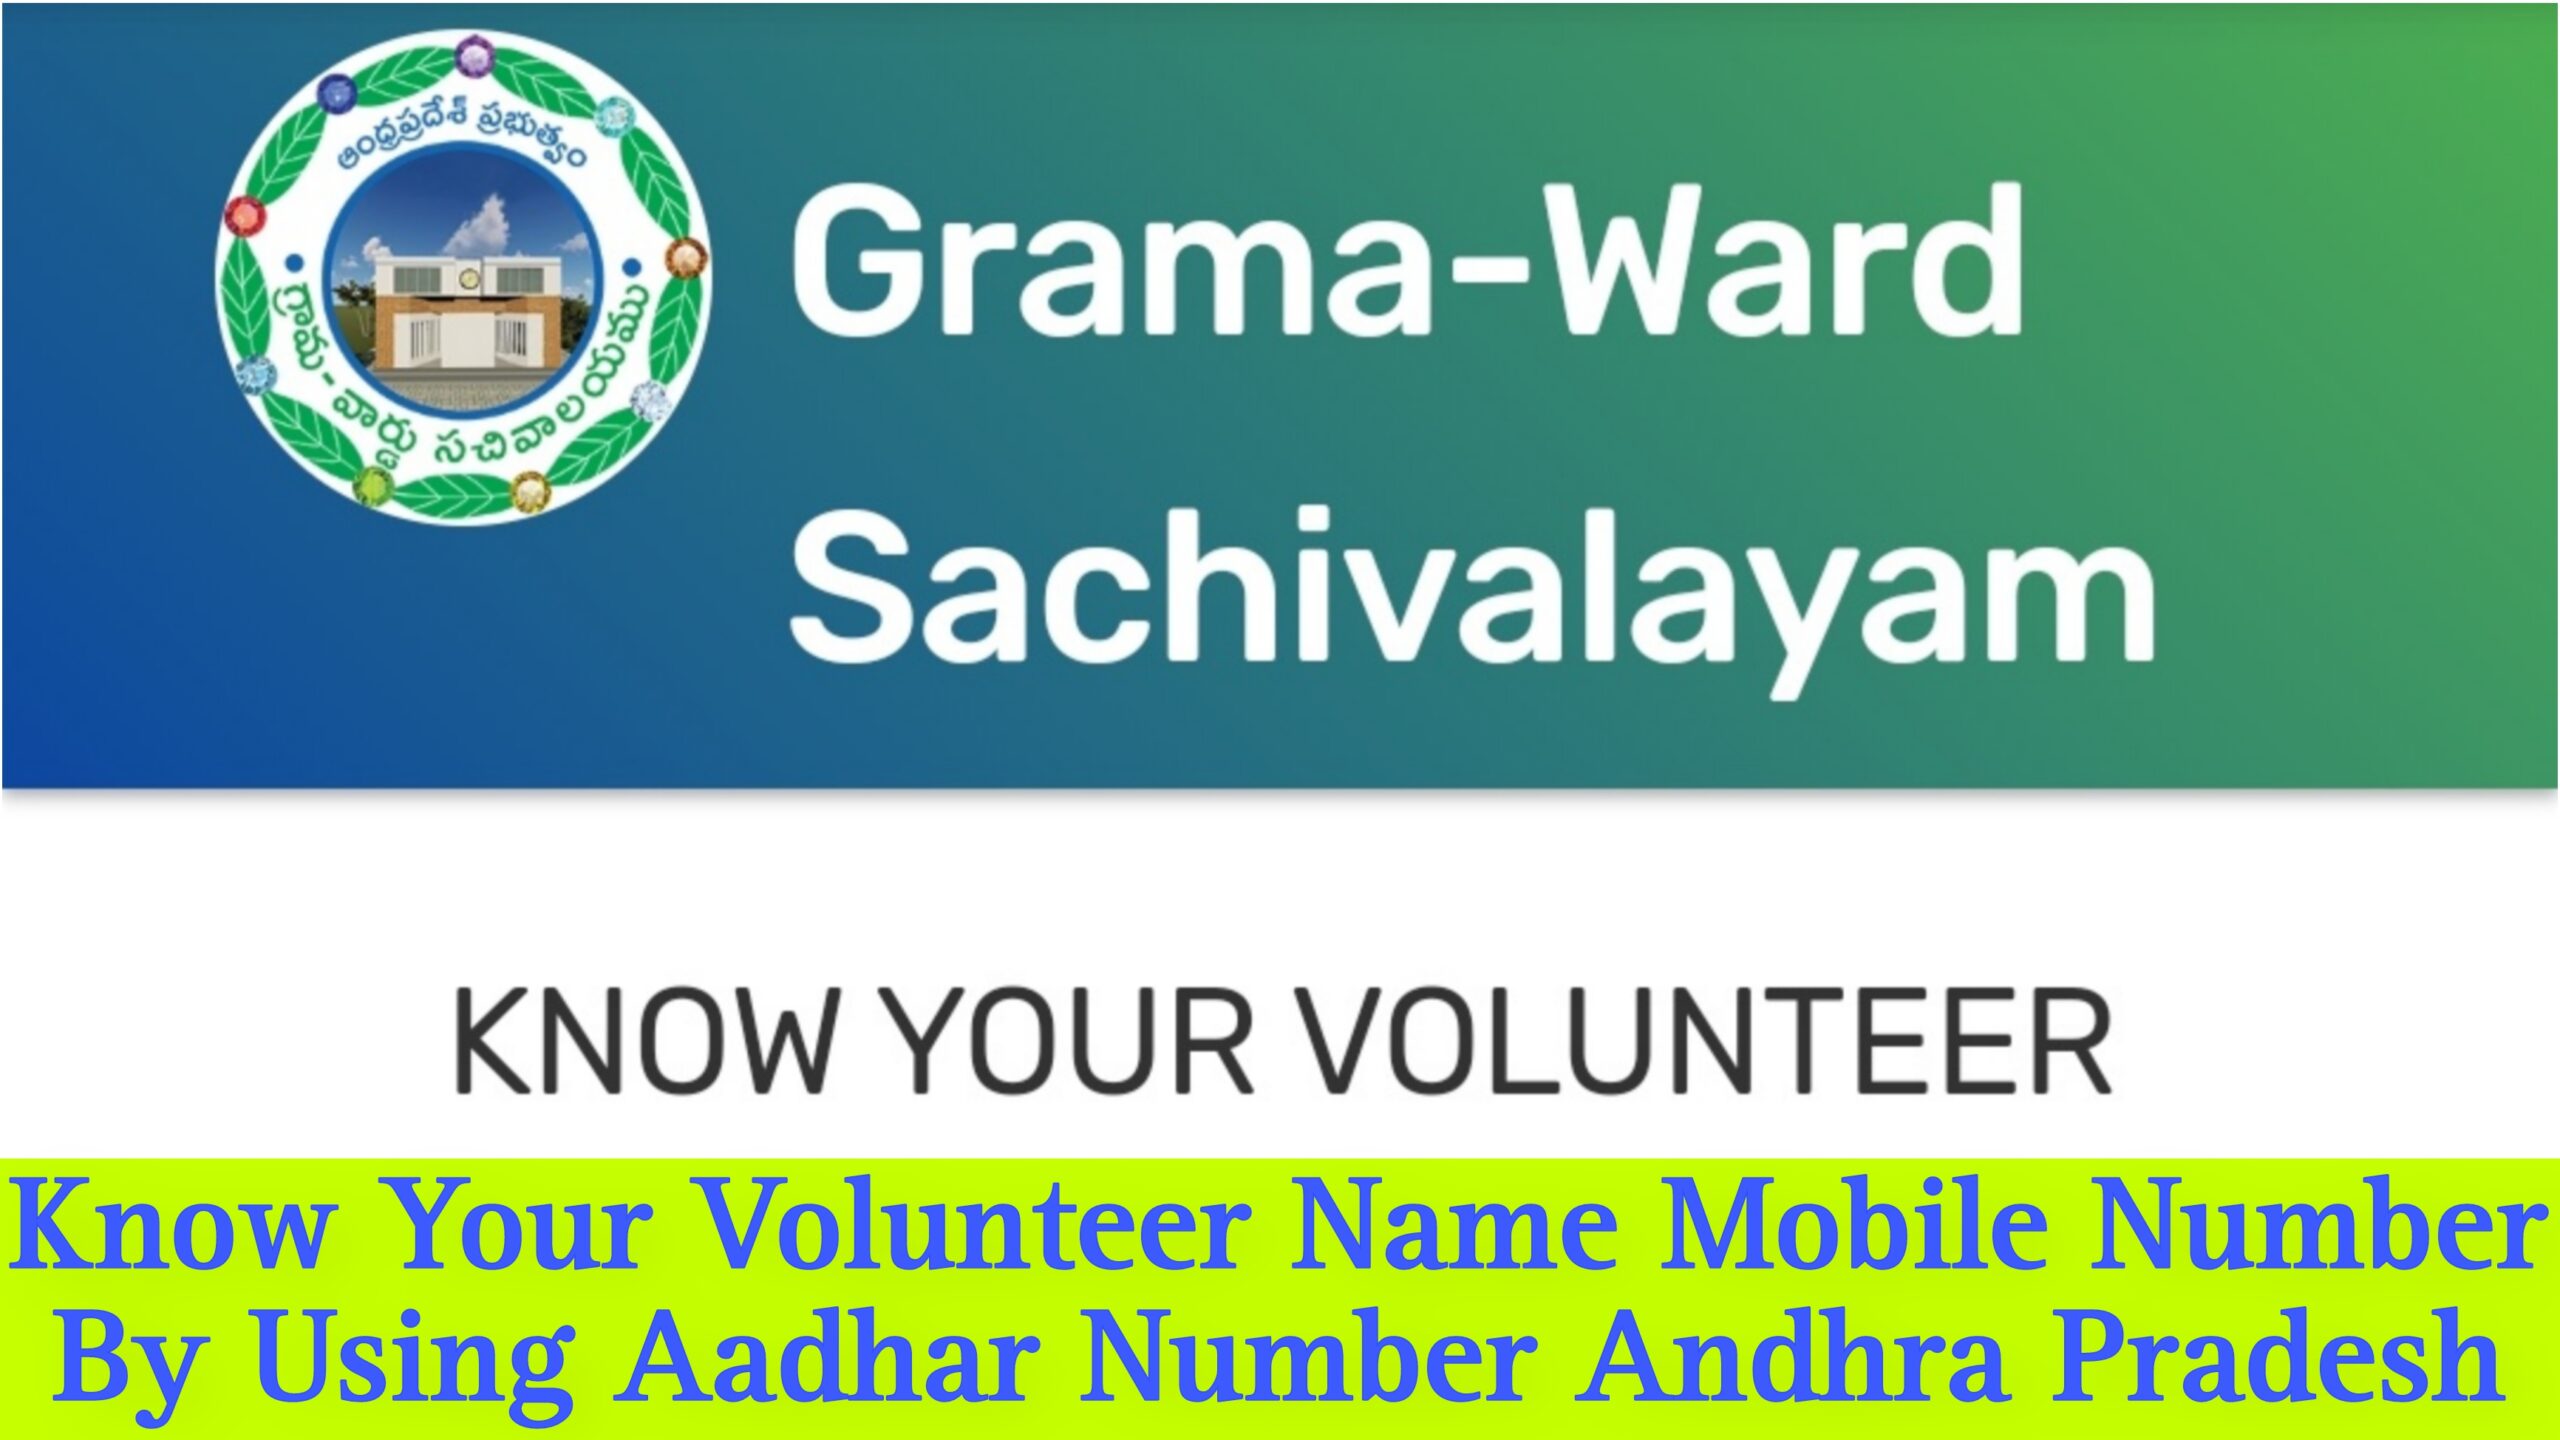 Know Your Volunteer Name Mobile Number By Using Aadhar Number Andhra Pradesh